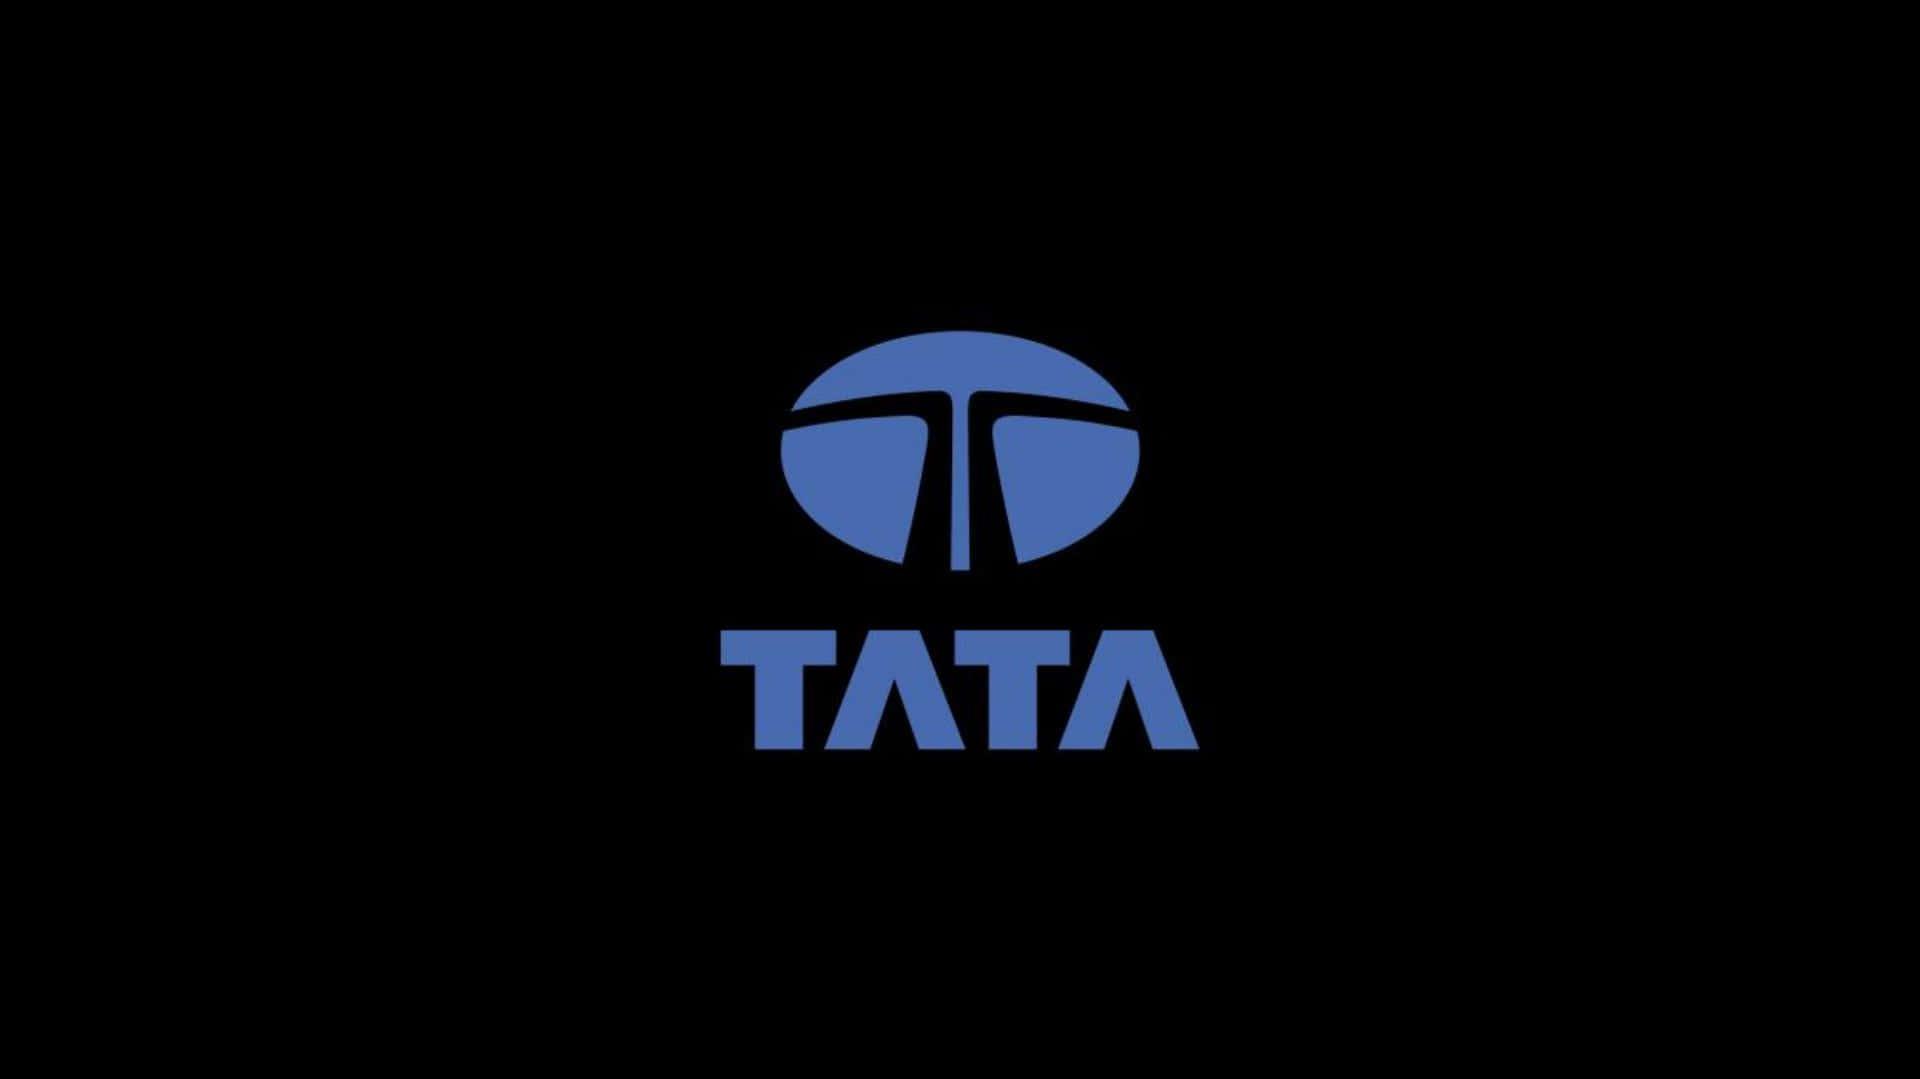 Tata Motors Mercial Trucks On Road Wallpaper